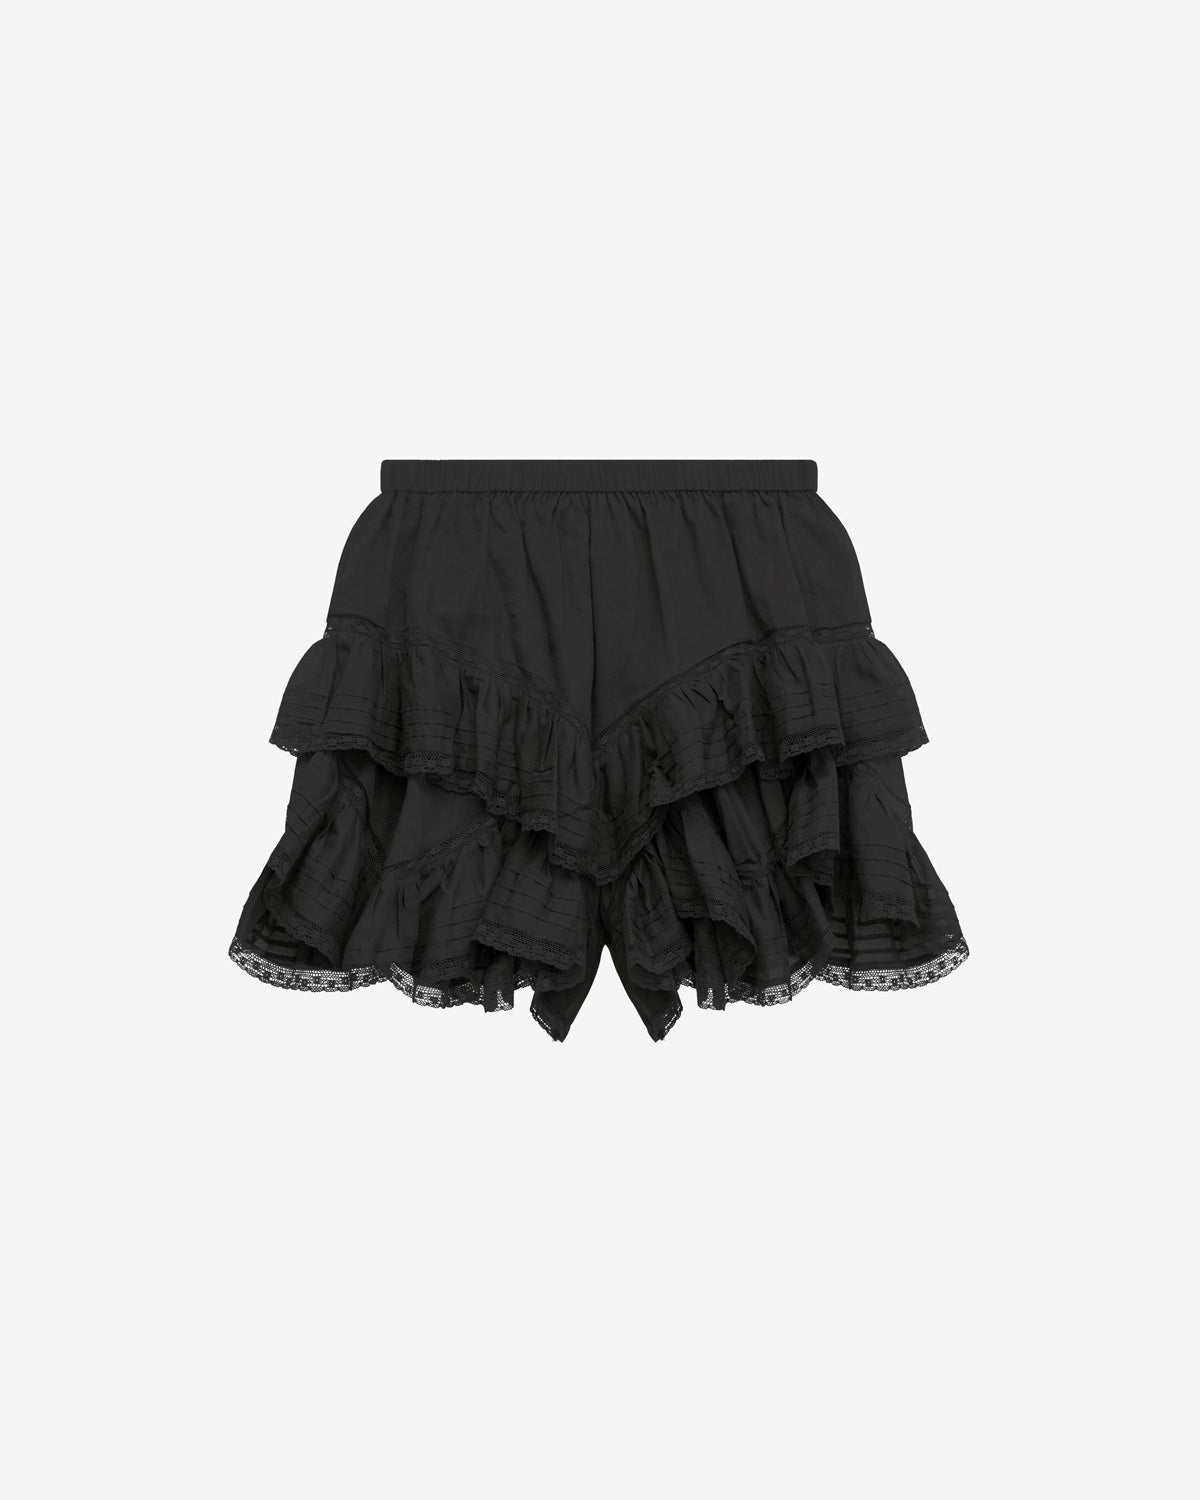 Gisele shorts Woman Black 1